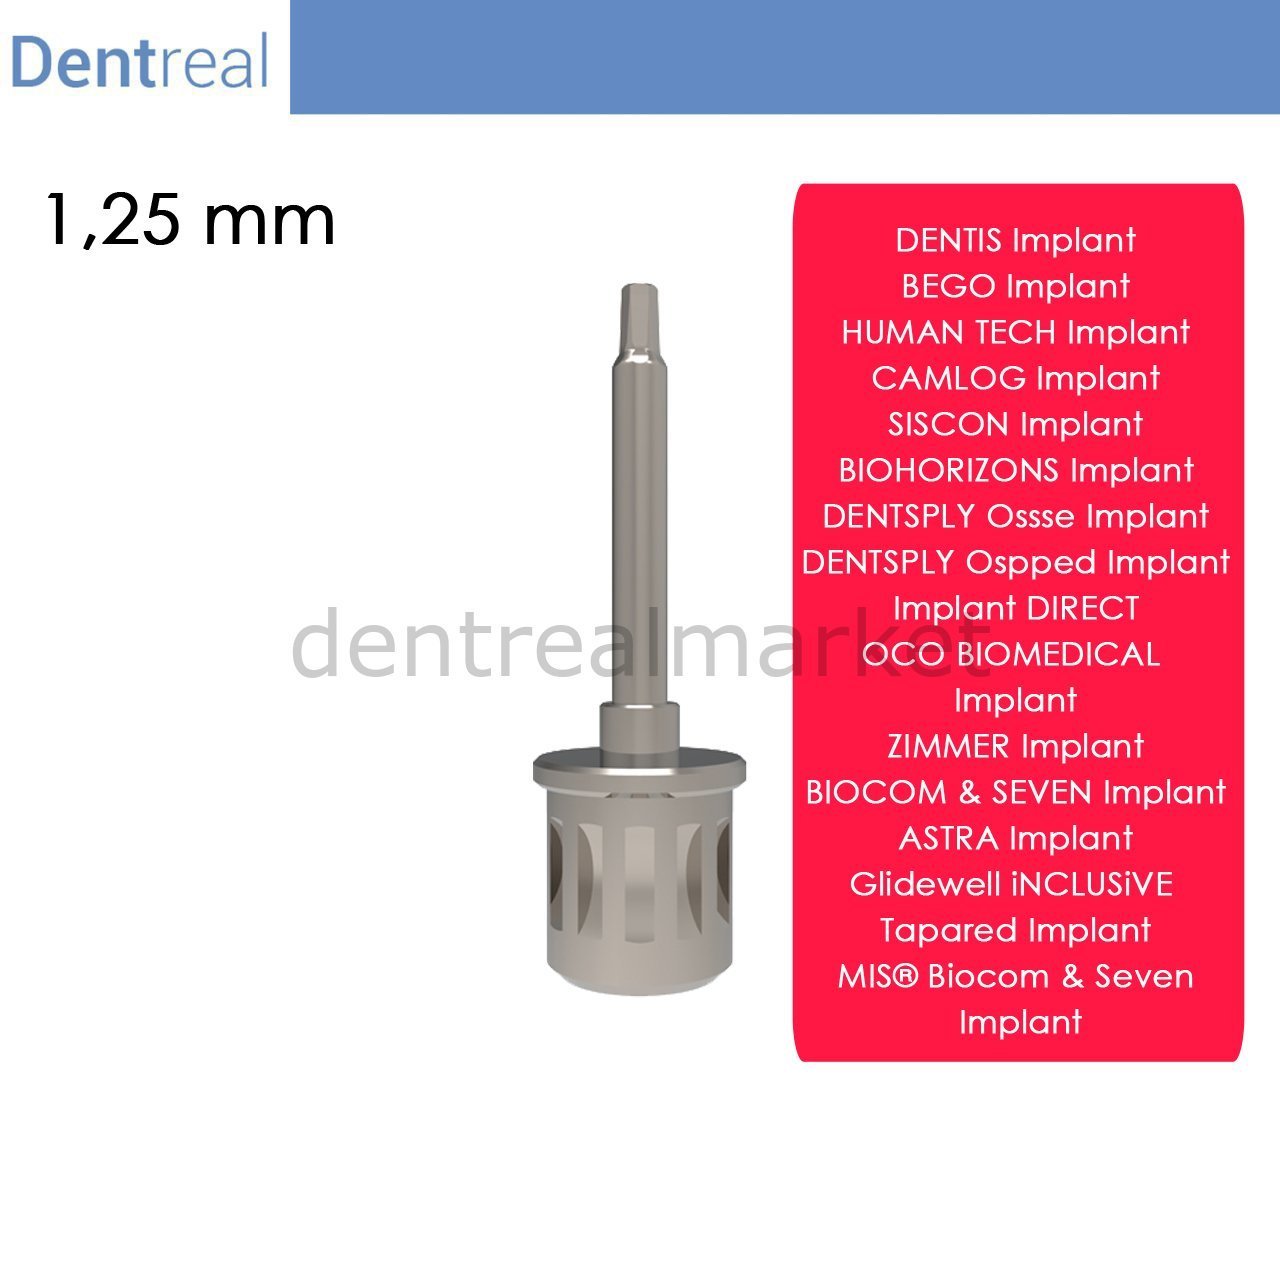 DentrealStore - Dentreal Screwdriver for Bego Implant - 1,25 mm Hex Driver